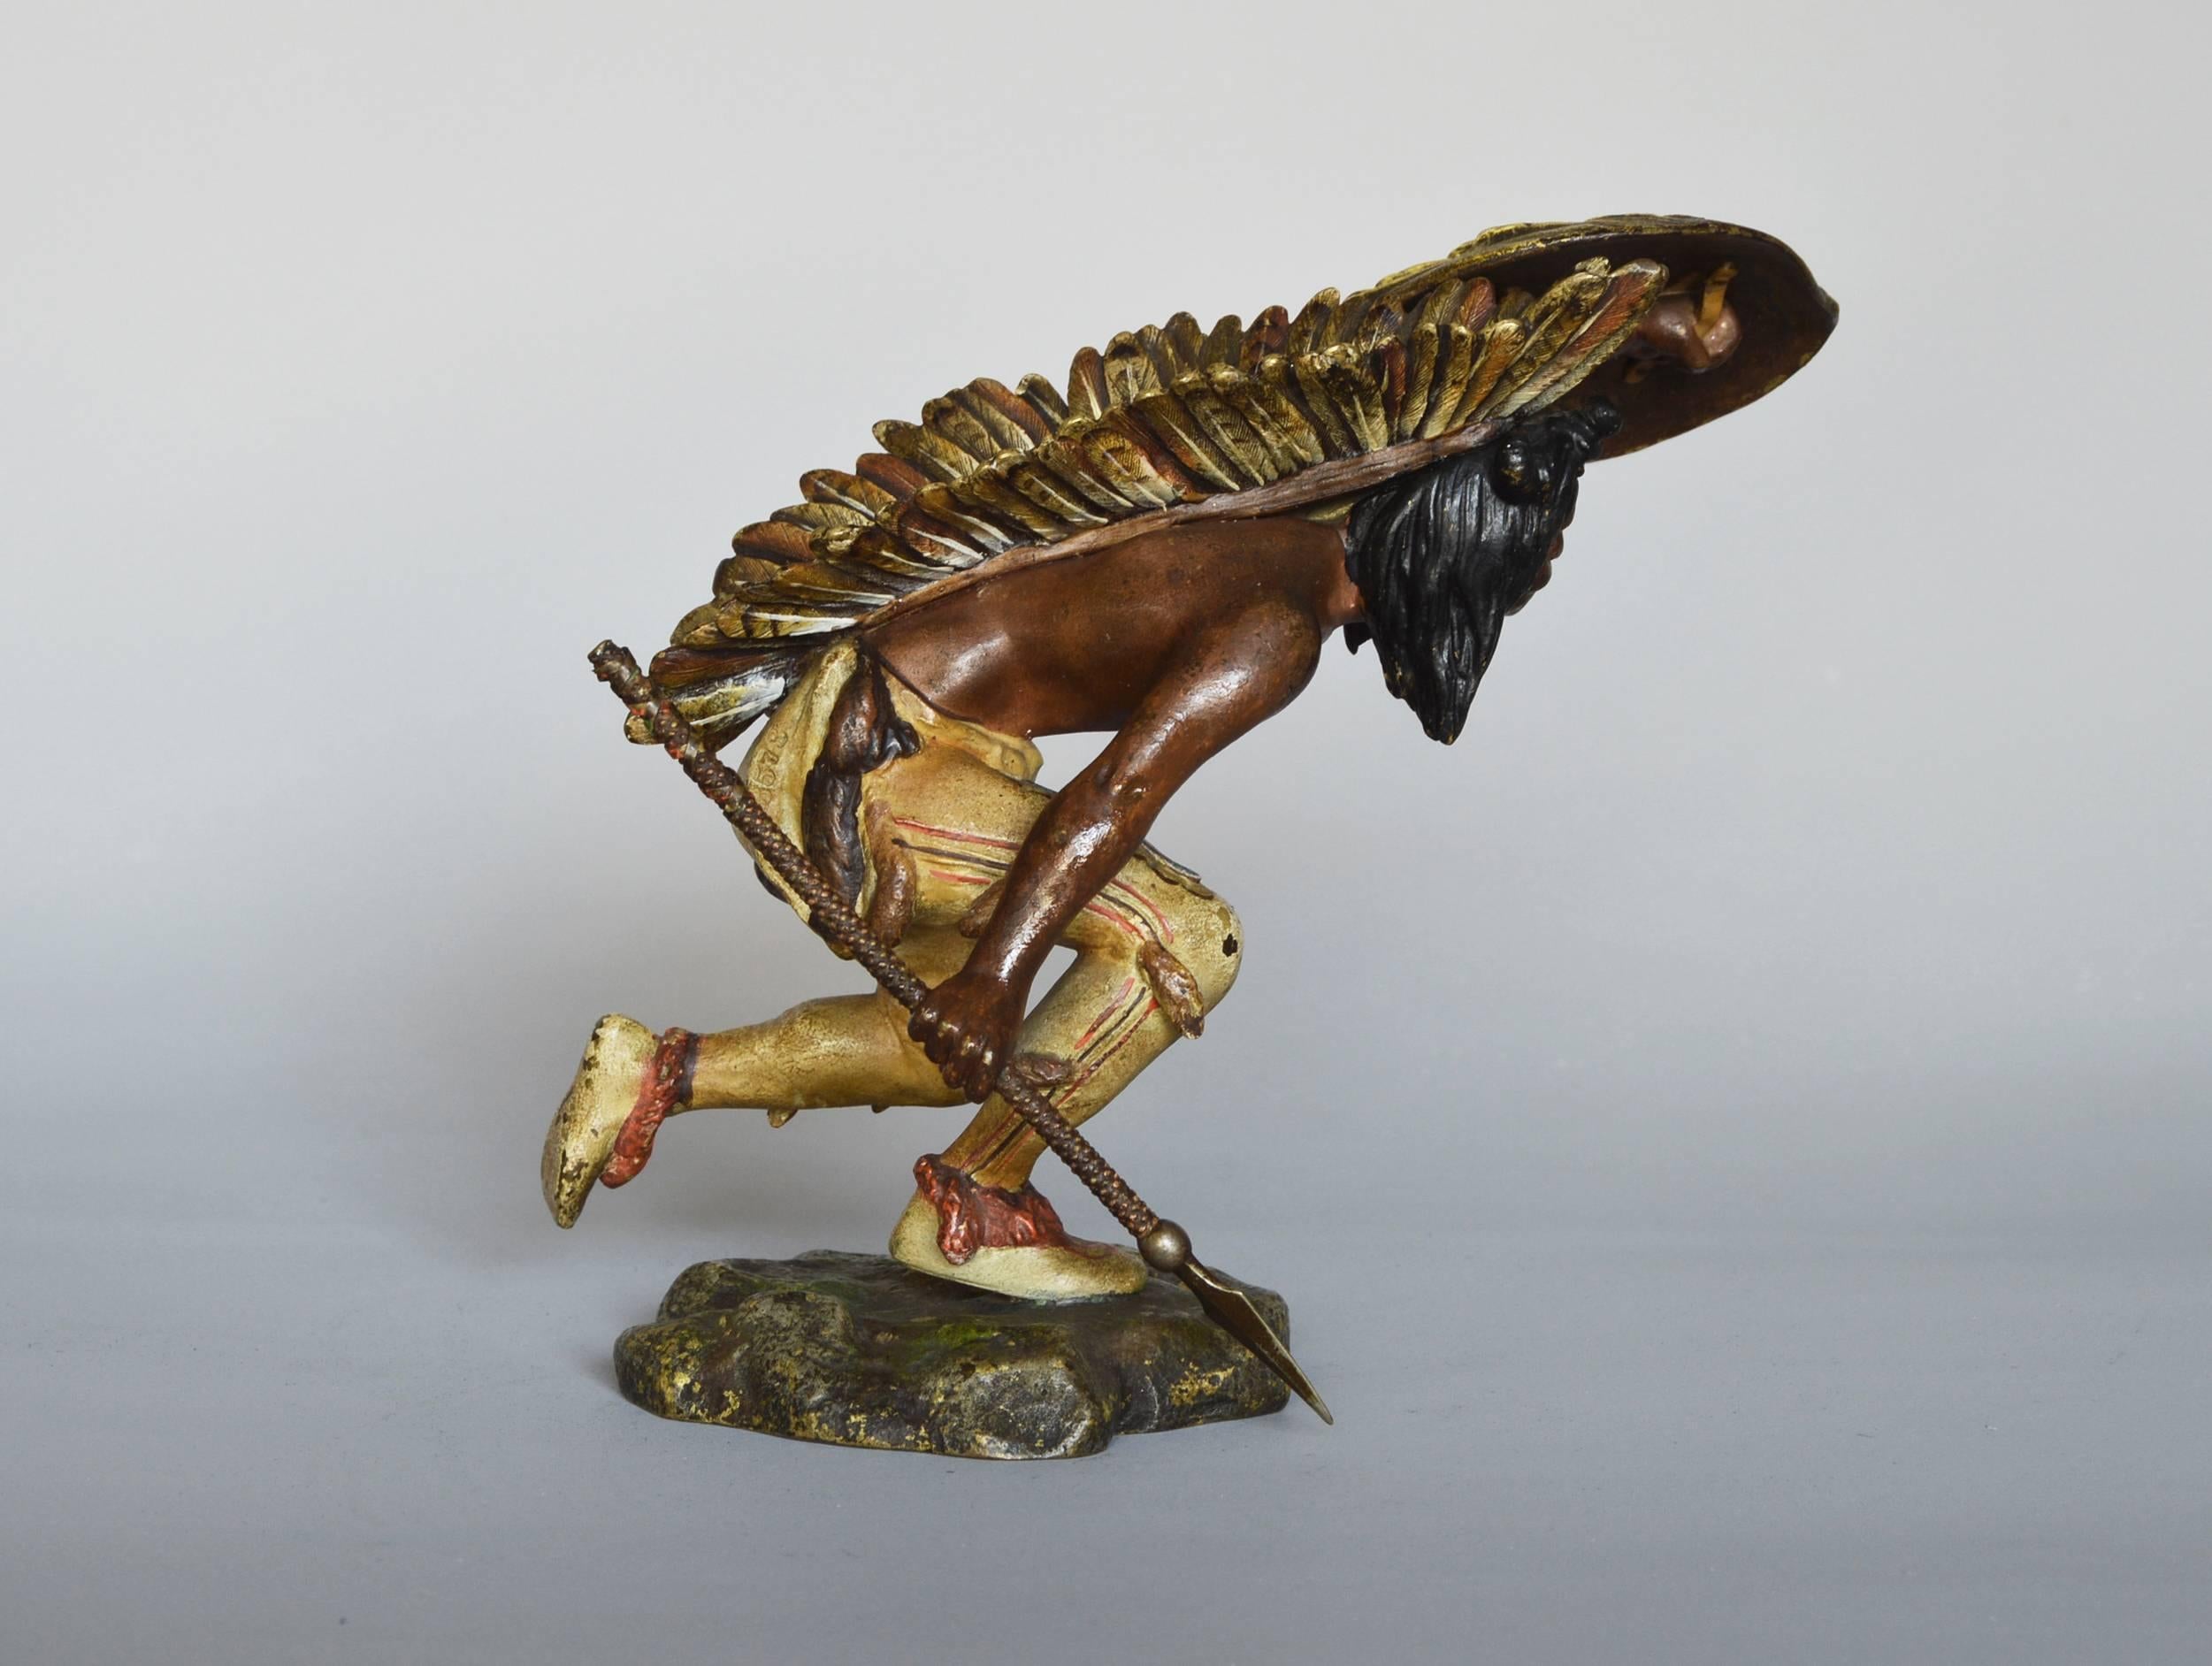 Native American Indian Crouching, bronze sculpture 1